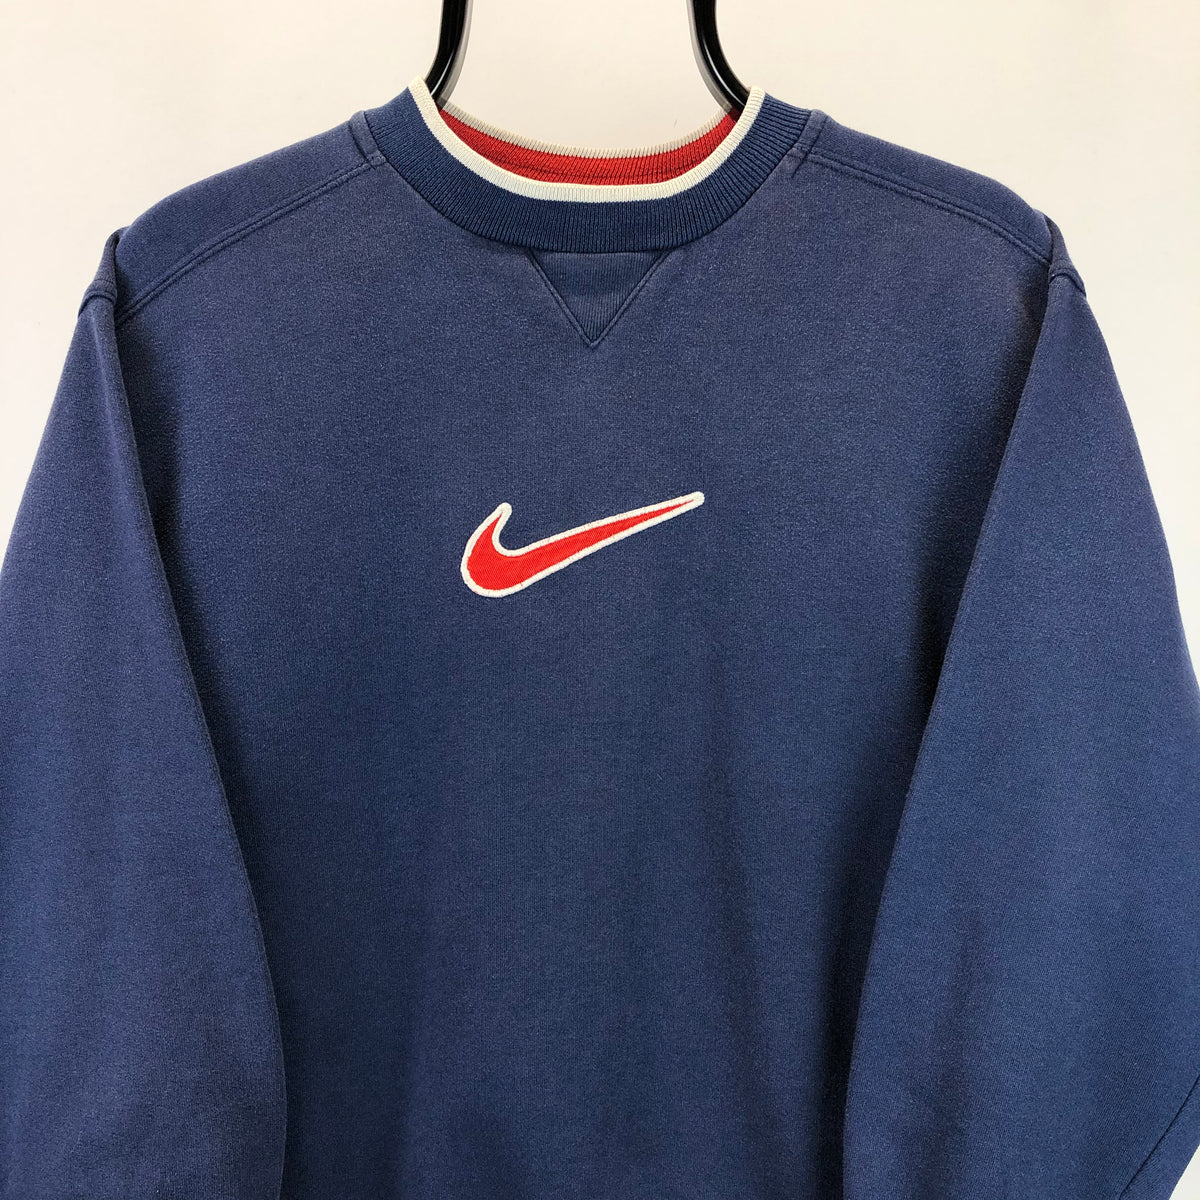 Dispensación A bordo Intacto Vintage 90s Nike Embroidered Centre Swoosh Sweatshirt in Navy/Red - Me -  Vintique Clothing